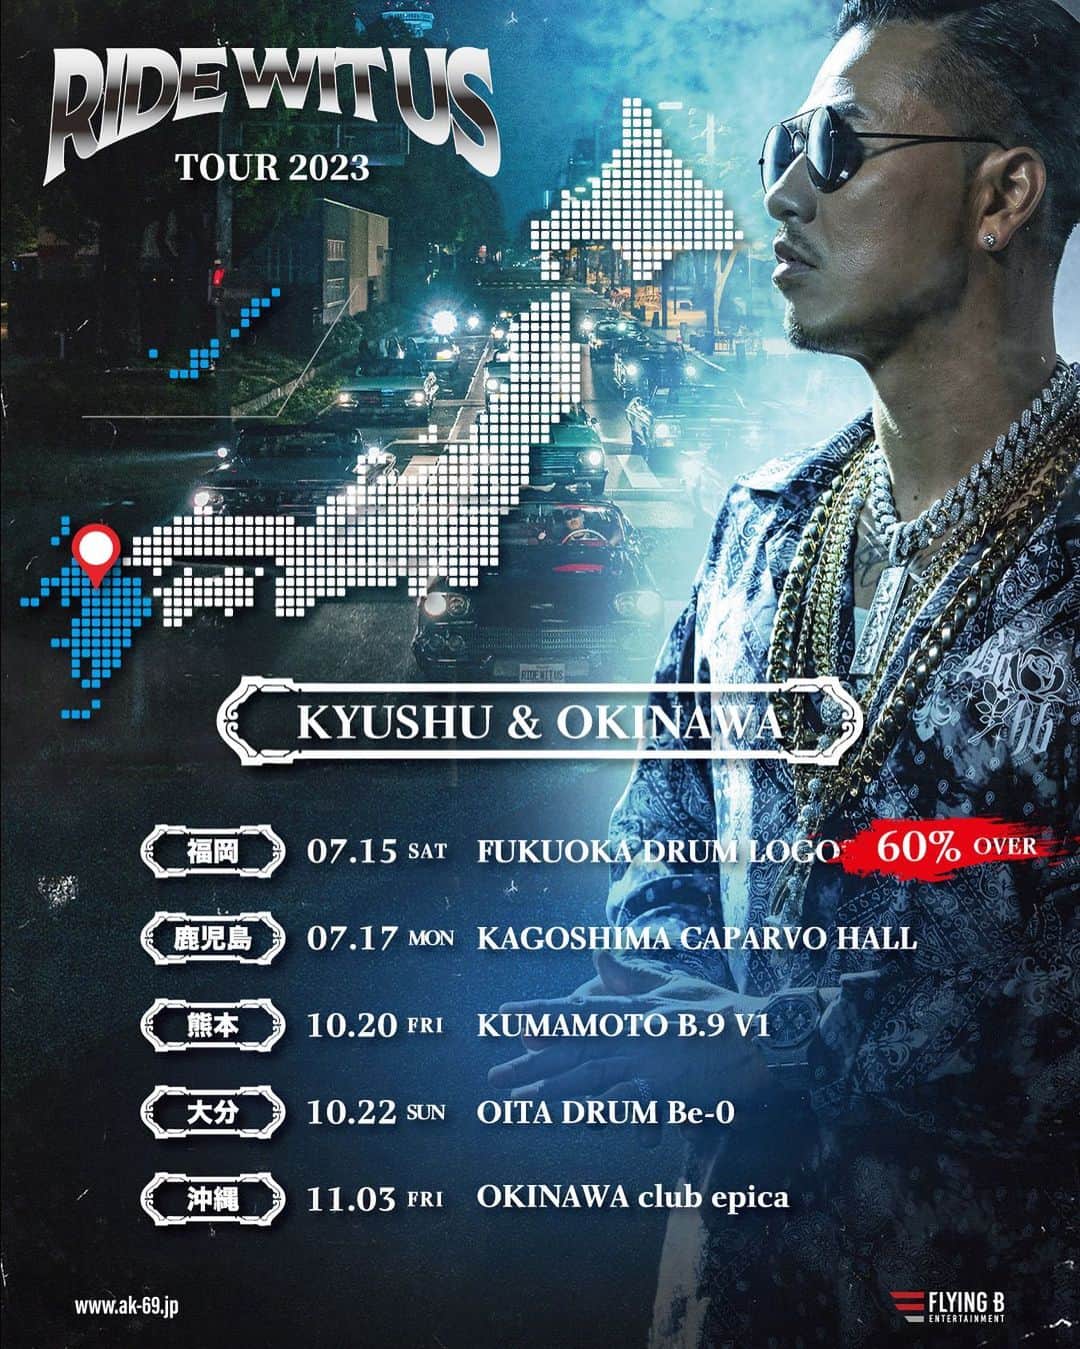 AK-69のインスタグラム：「- "RIDE WIT US TOUR 2023" 【九州 & 沖縄】 ■07.15（金）福岡DRUM LOGOS [福岡] ■07.17（祝）鹿児島CAPARVO HALL [鹿児島] ■10.20（金）熊本B.9 V1 [熊本] ■10.22（日）大分DRUM Be-0 [大分] ■11.03（金）沖縄club epica [沖縄]  📍全会場未成年入場OK  #AK69 #RideWitUsTour2023 #全国ツアー #九州 #沖縄 #皆の街に会いに行く」